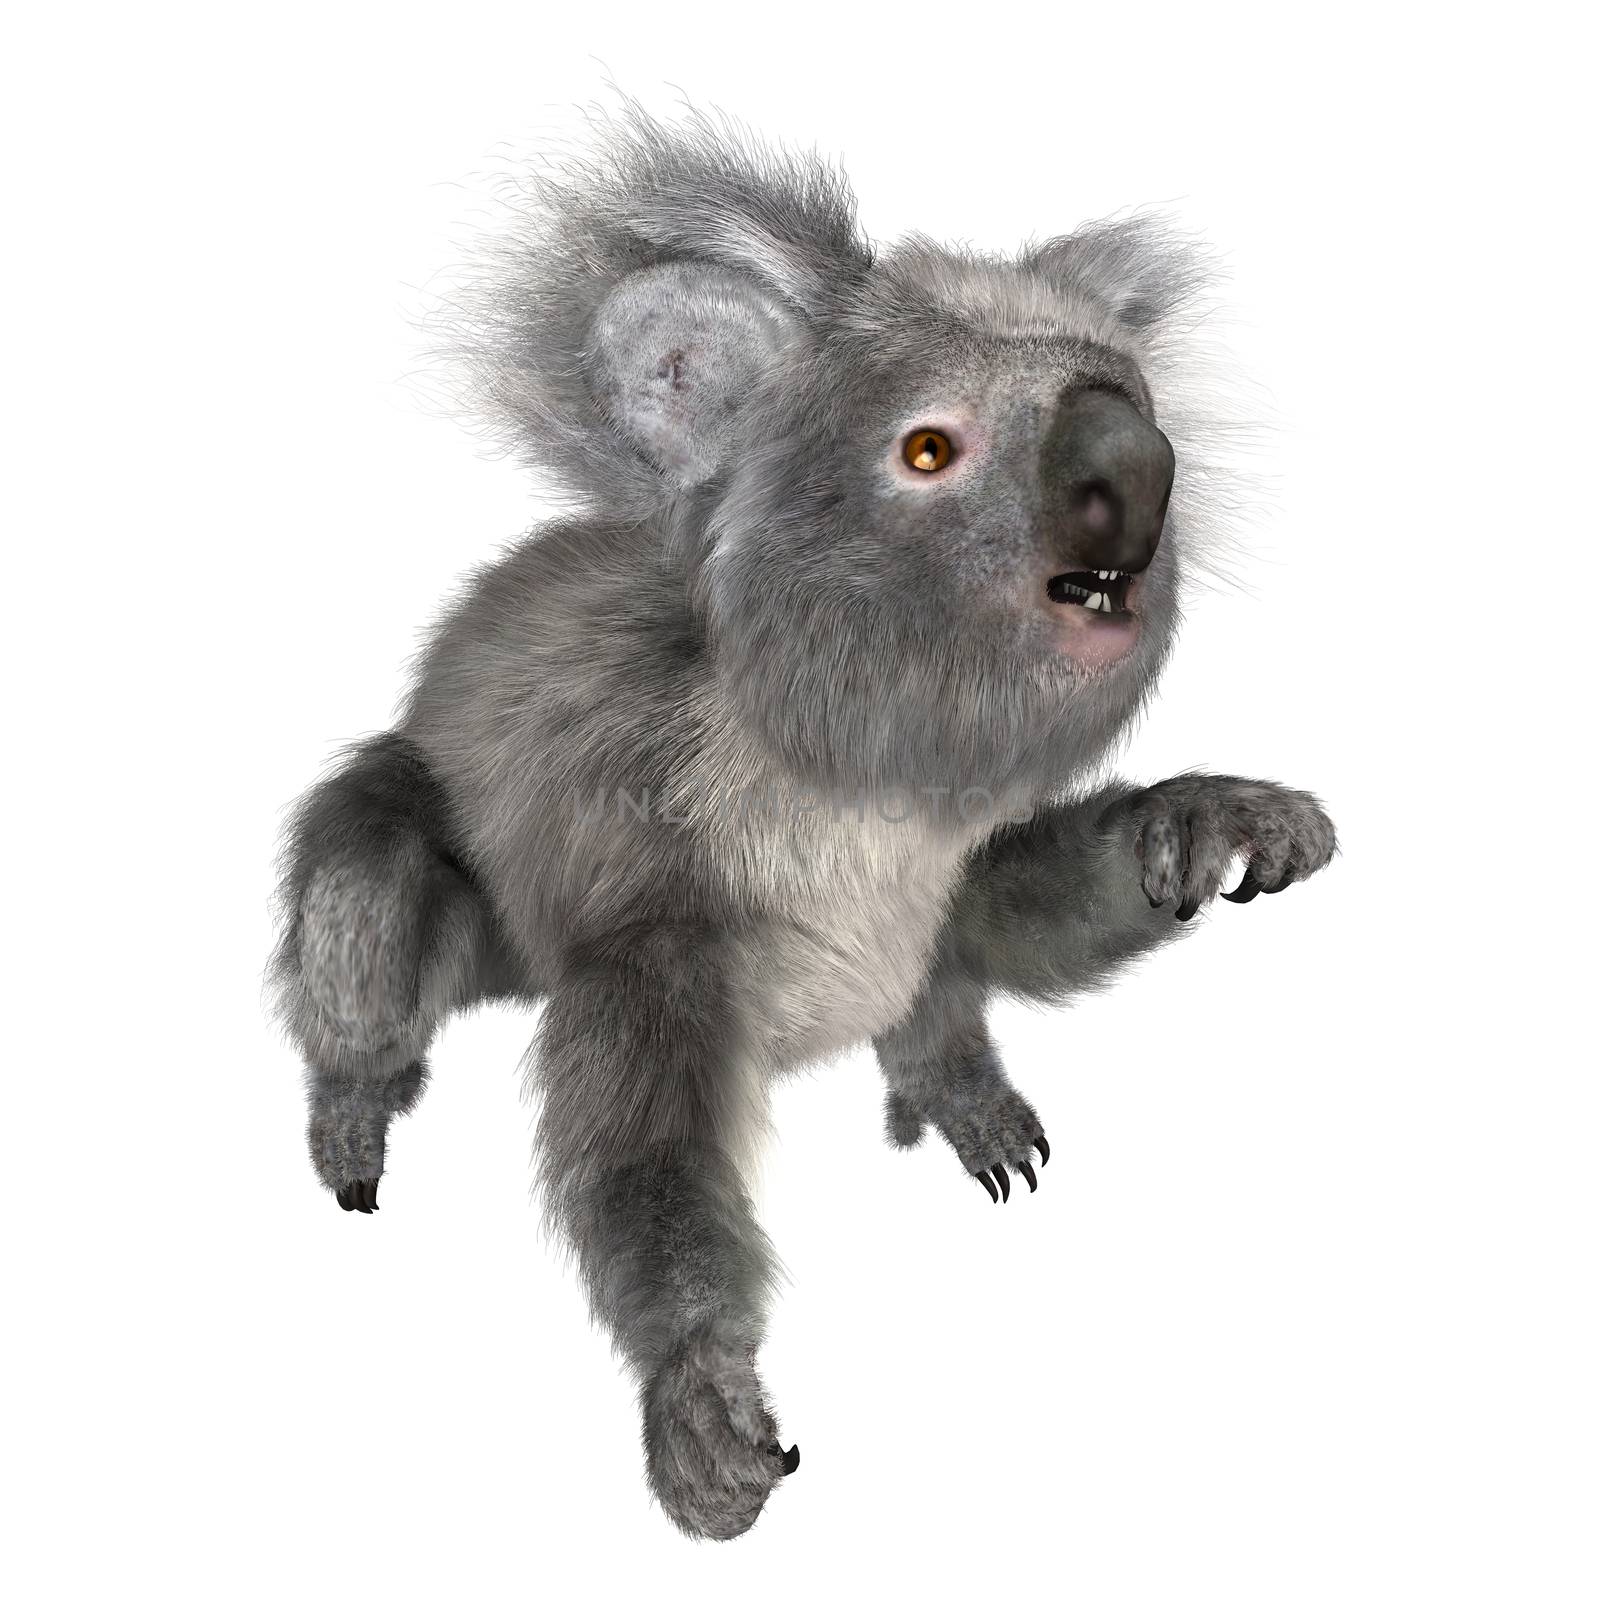 3D digital render of a cute Australian koala bear isolated on white background